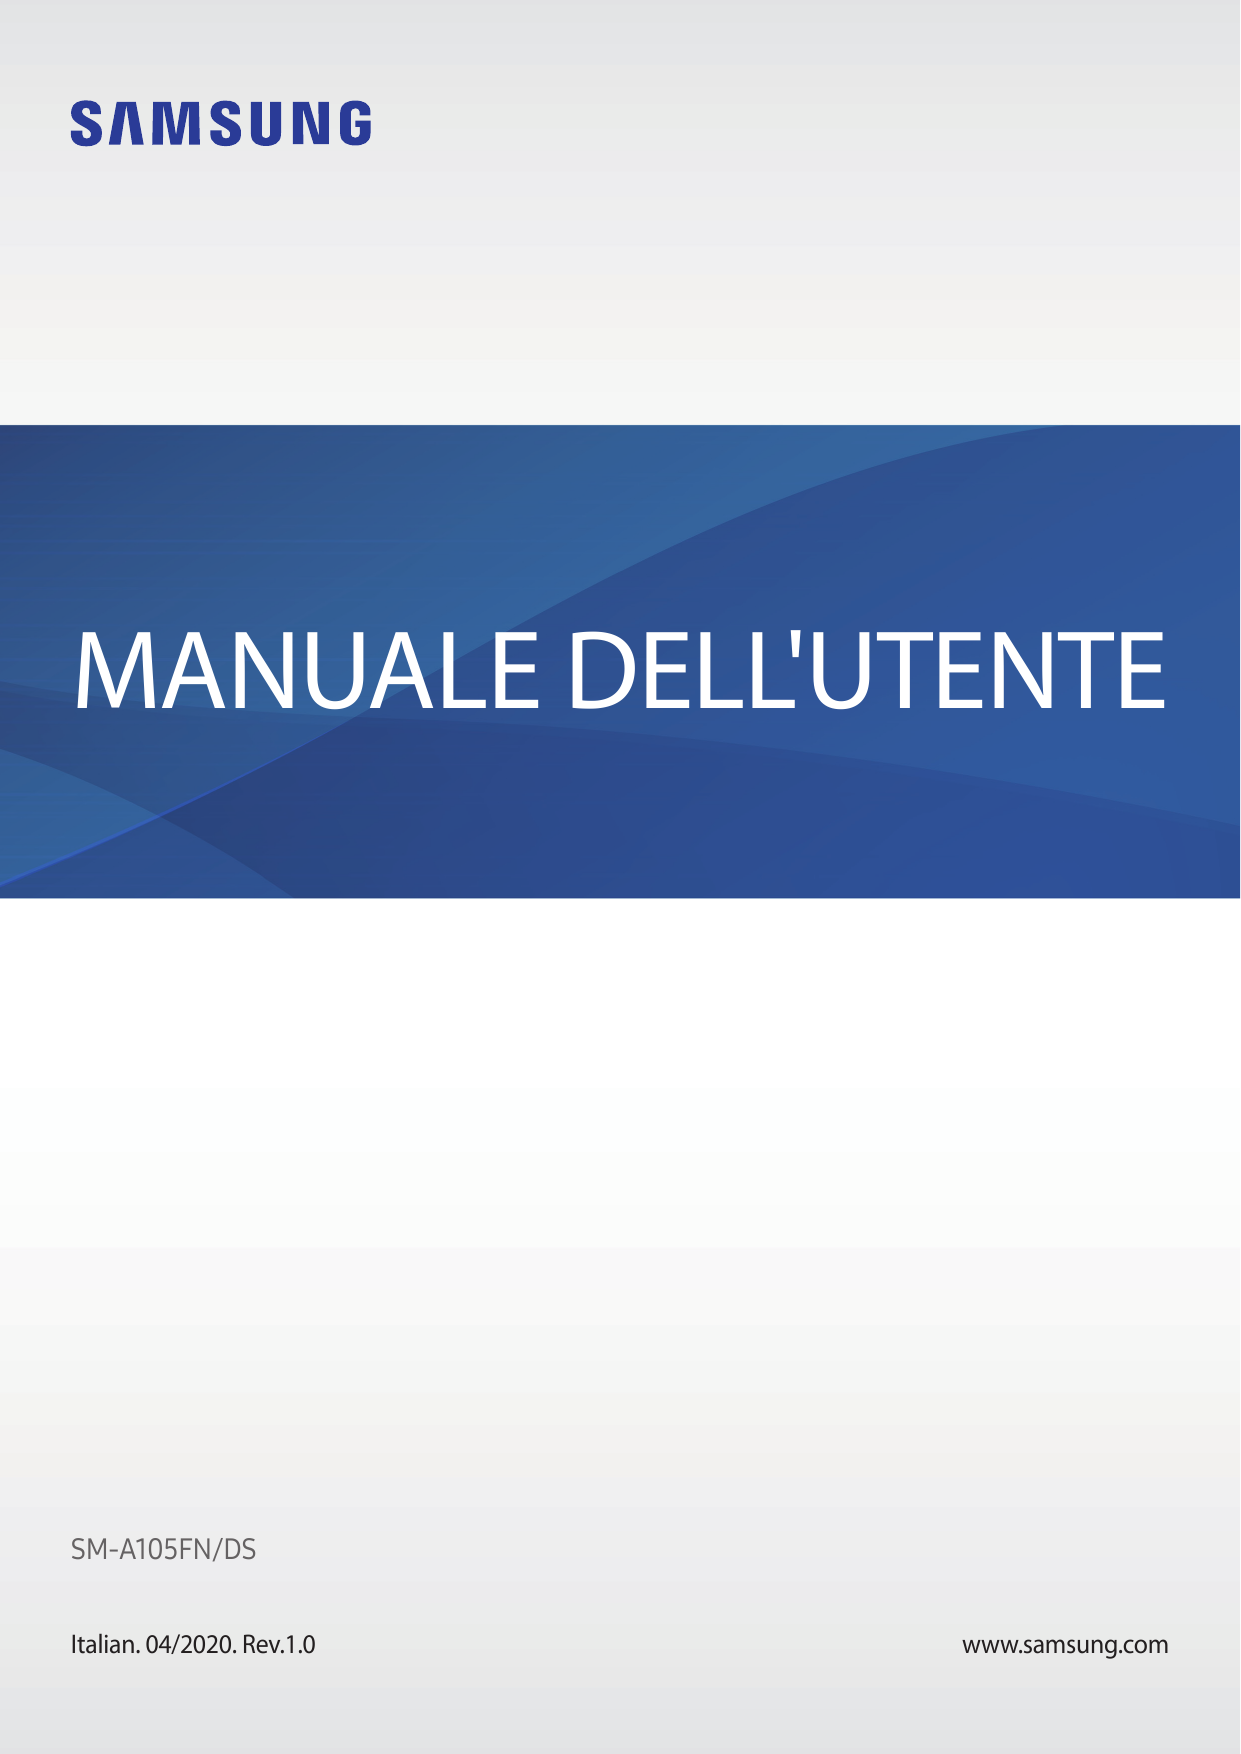 MANUALE DELL'UTENTESM-A105FN/DSItalian. 04/2020. Rev.1.0www.samsung.com